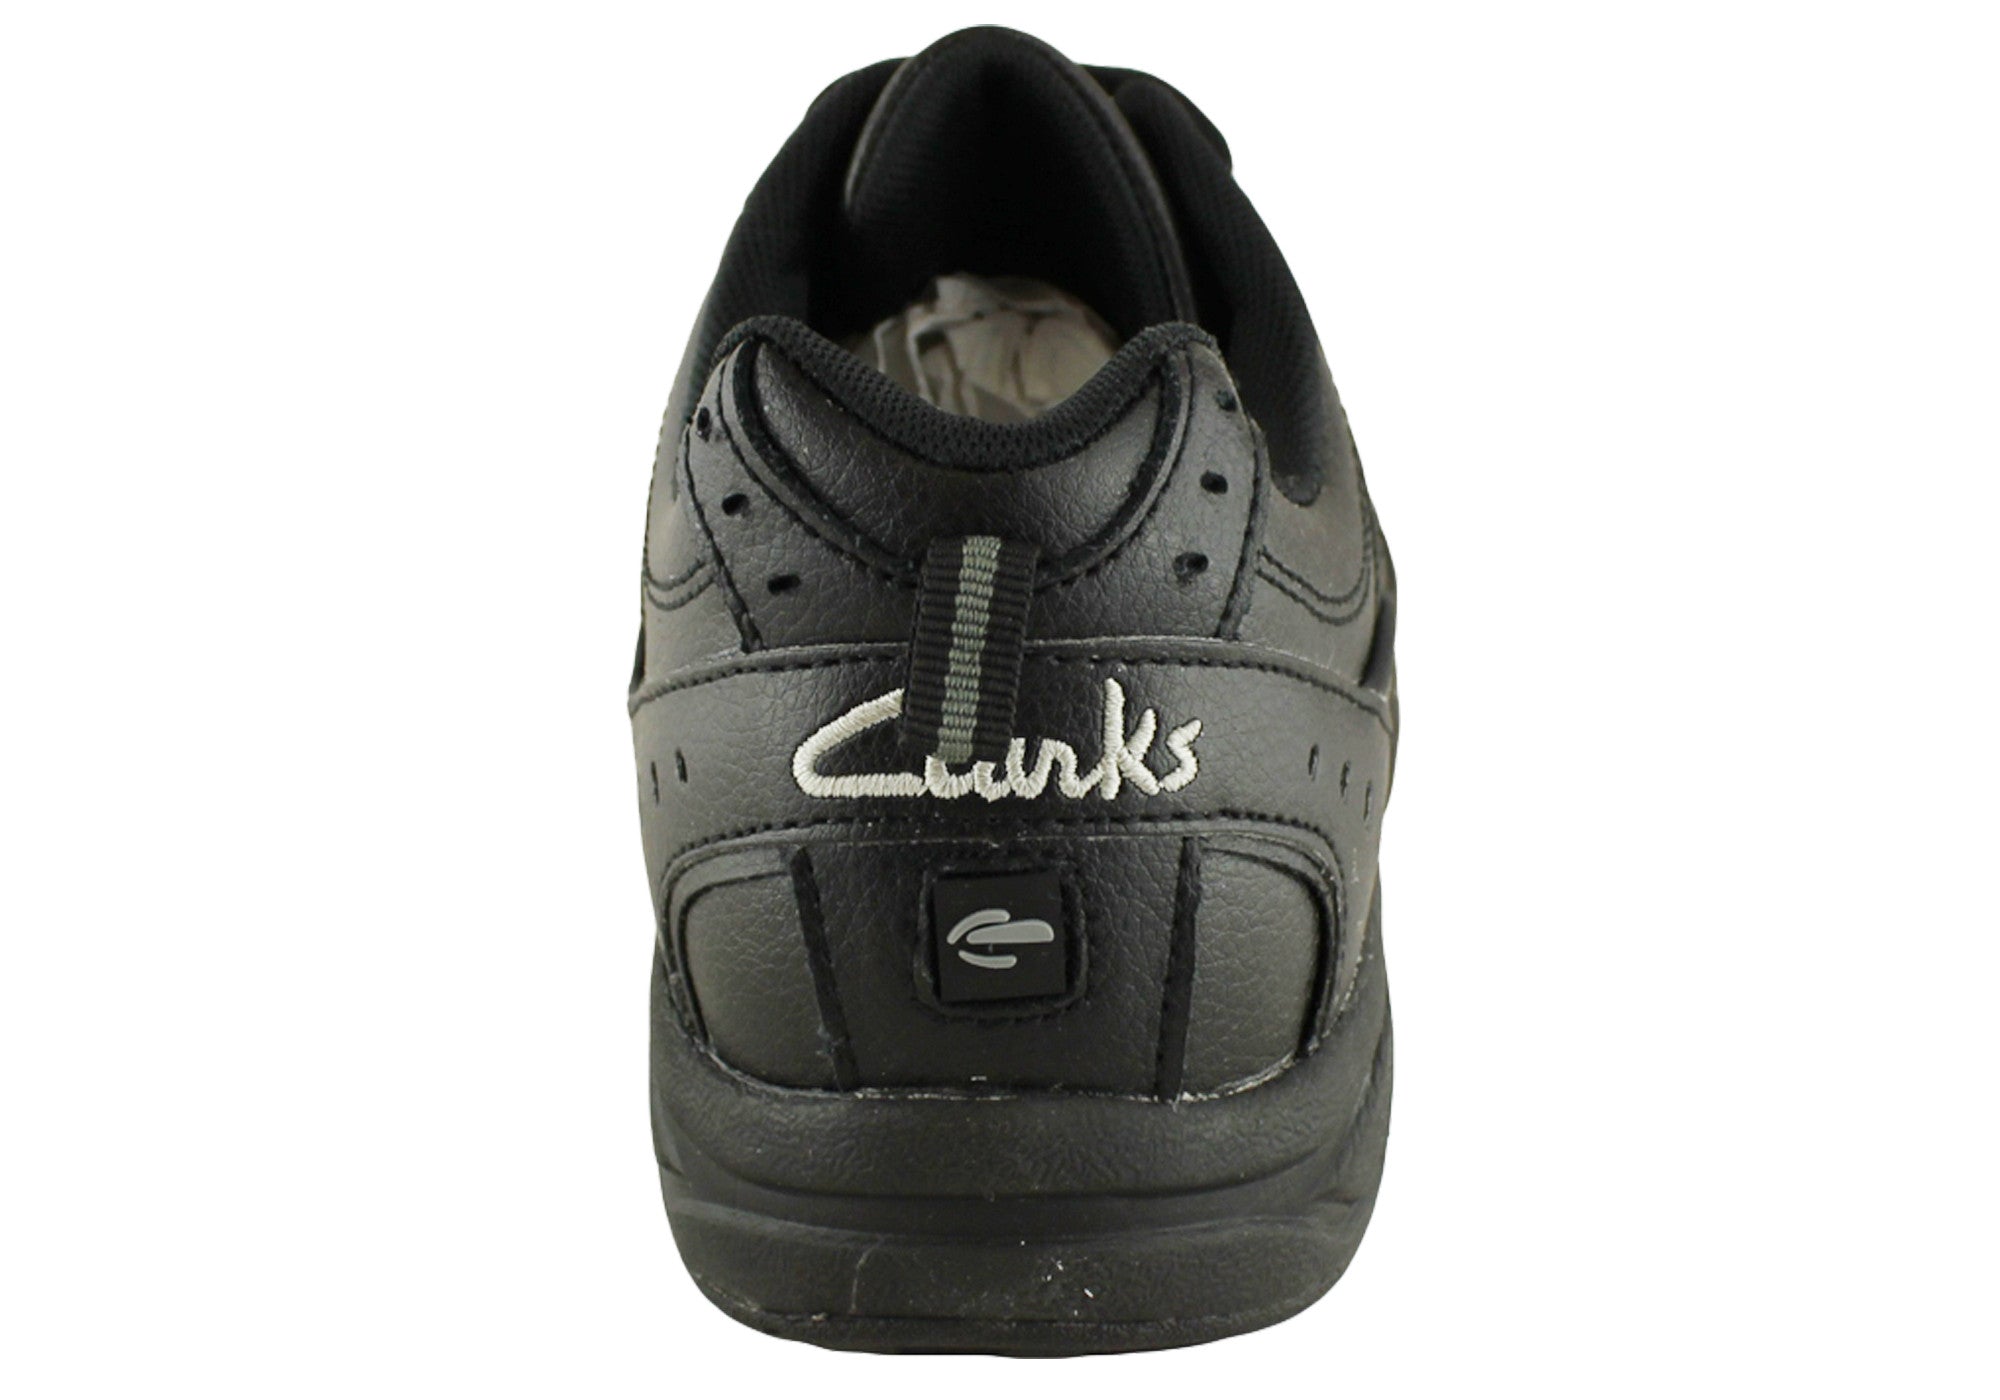 clarks children's sports shoes